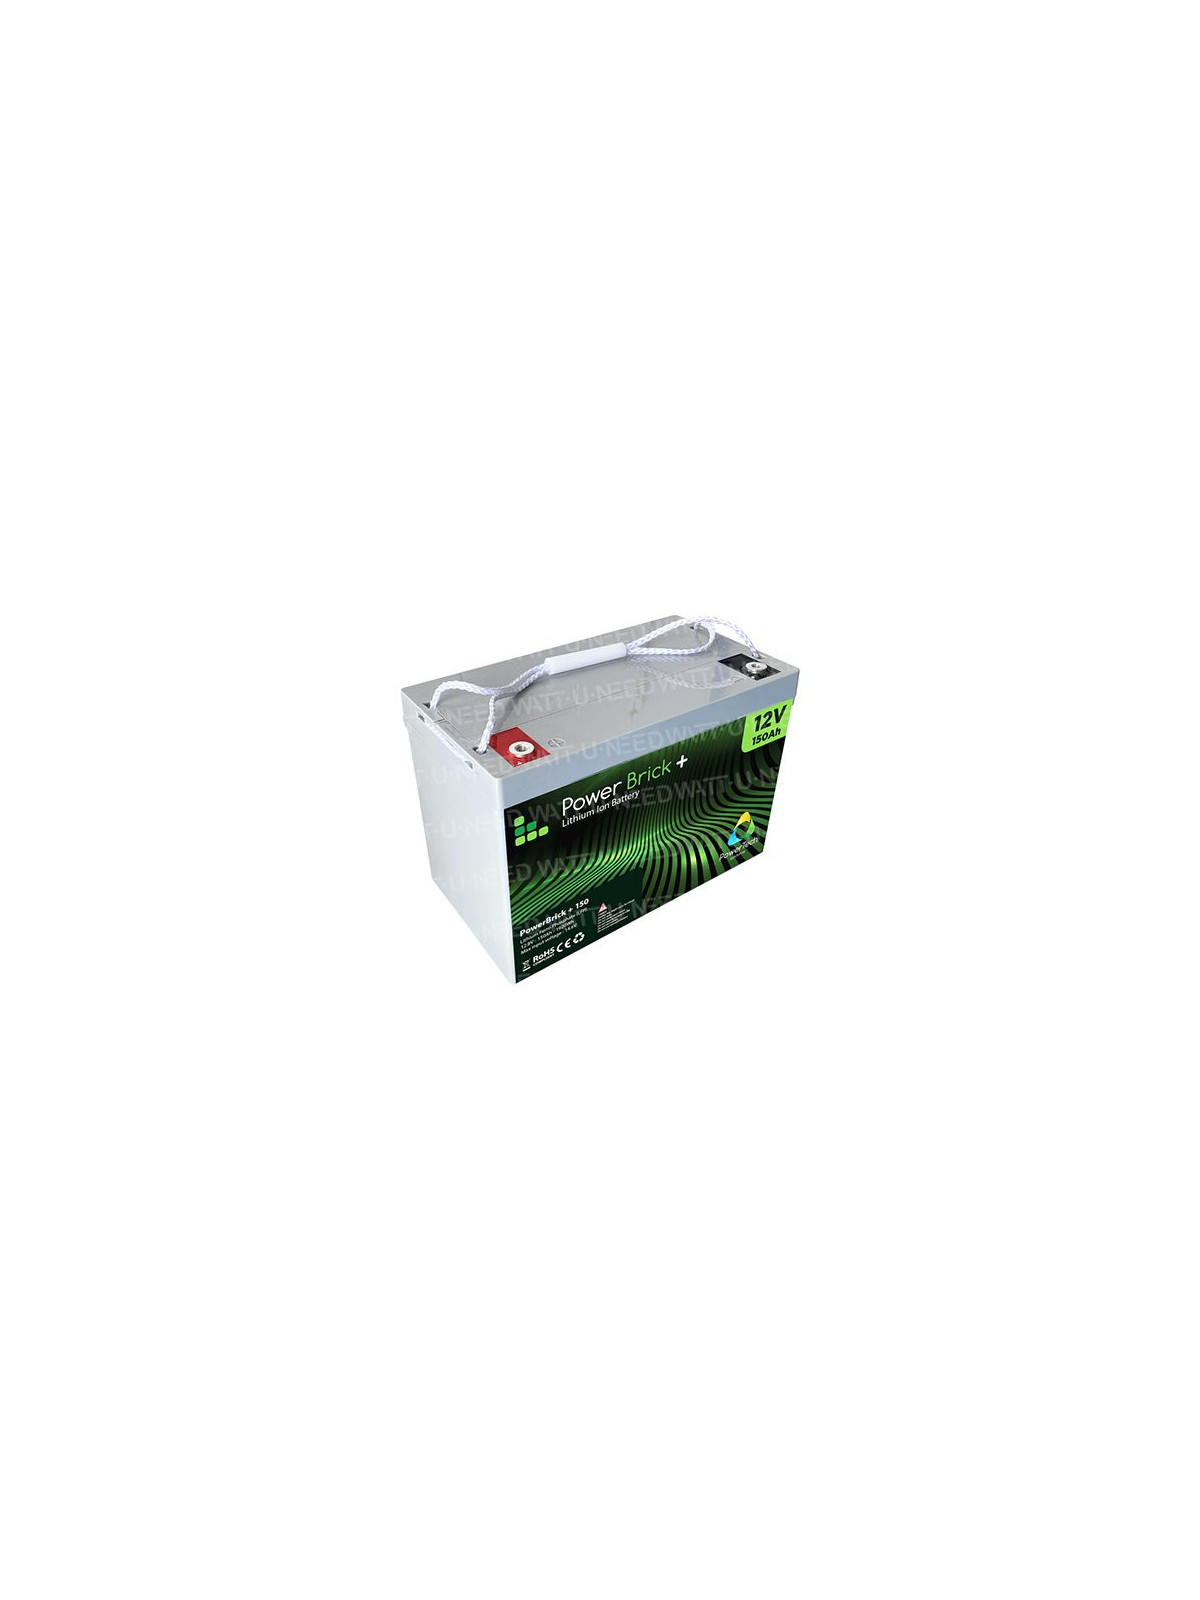 Batterie lithium PowerBrick+ 12V 150Ah